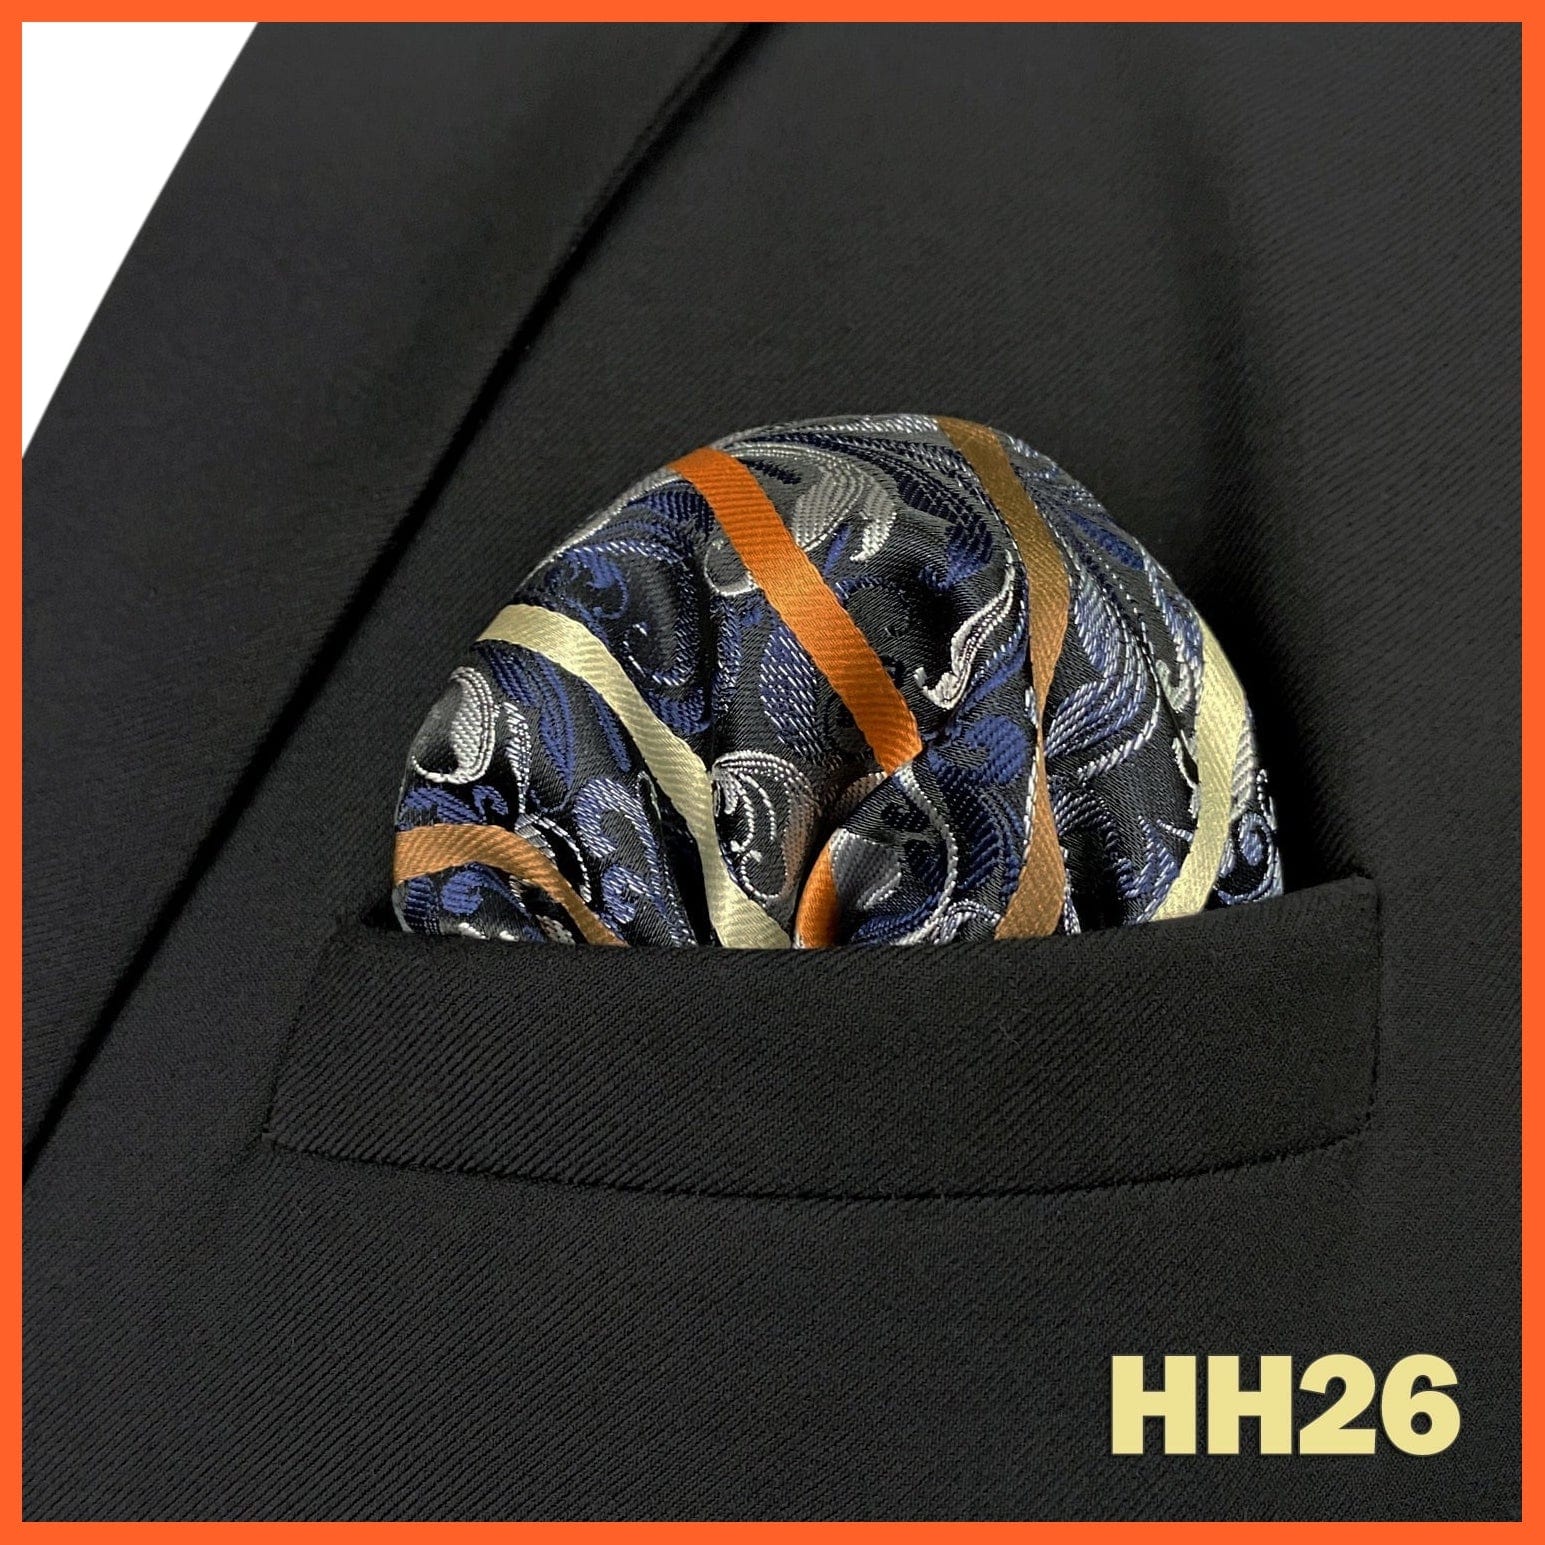 whatagift.com.au Handkerchief HH26 Colorful Multicolor Pocket Square Men's Classic Striped Handkerchief